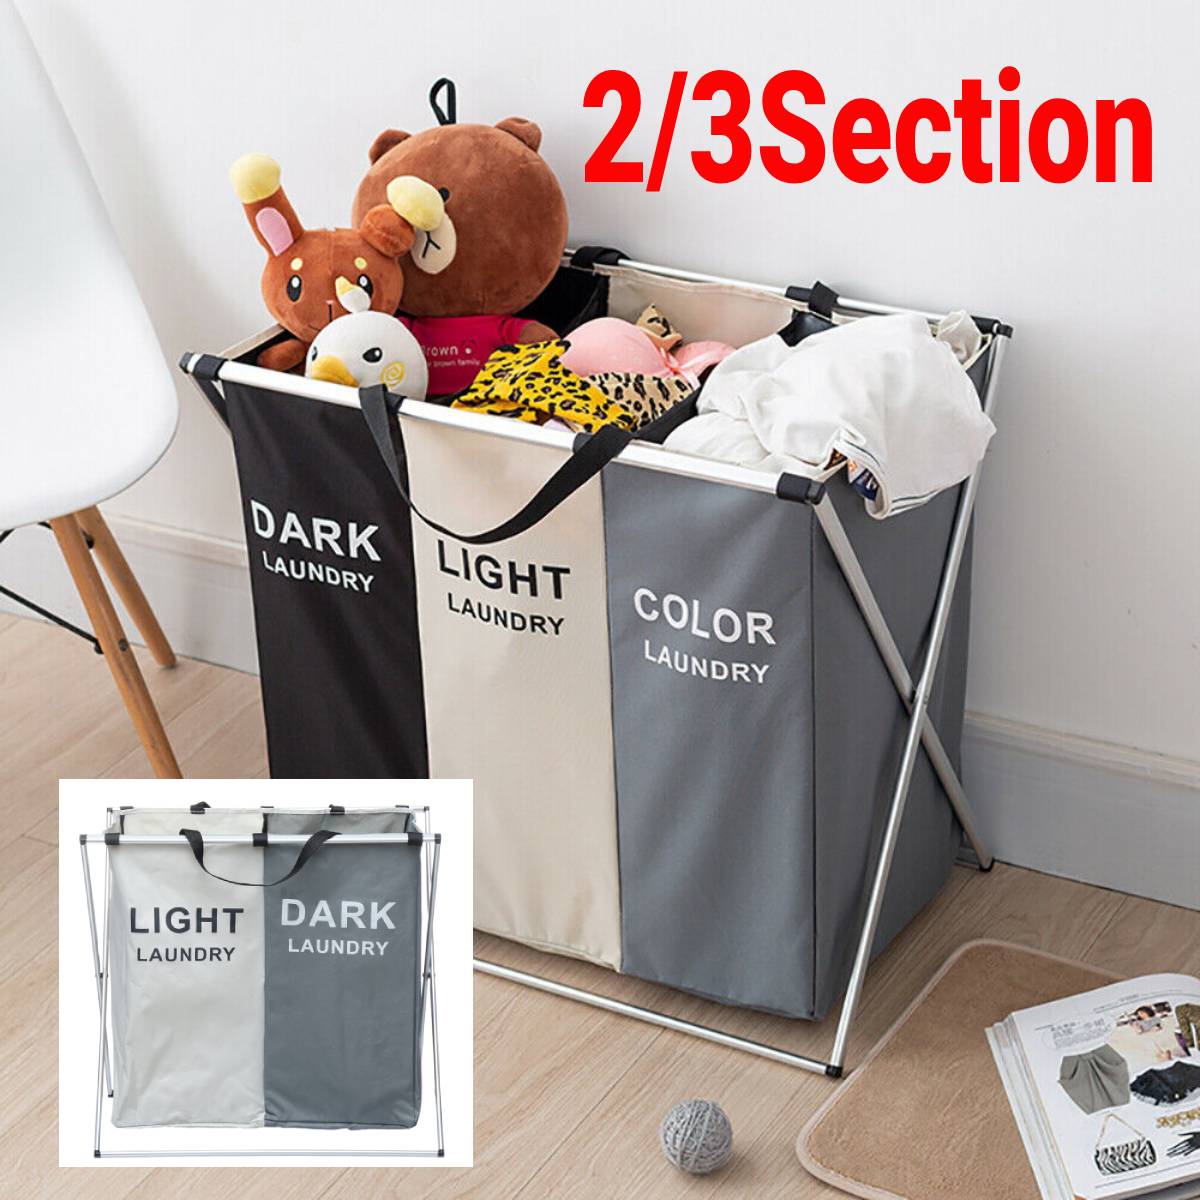 23-Cells-Dirty-Clothes-Laundry-Storage-Baskets-Organizer-Basket-Home-Storage-Basket-1759585-1